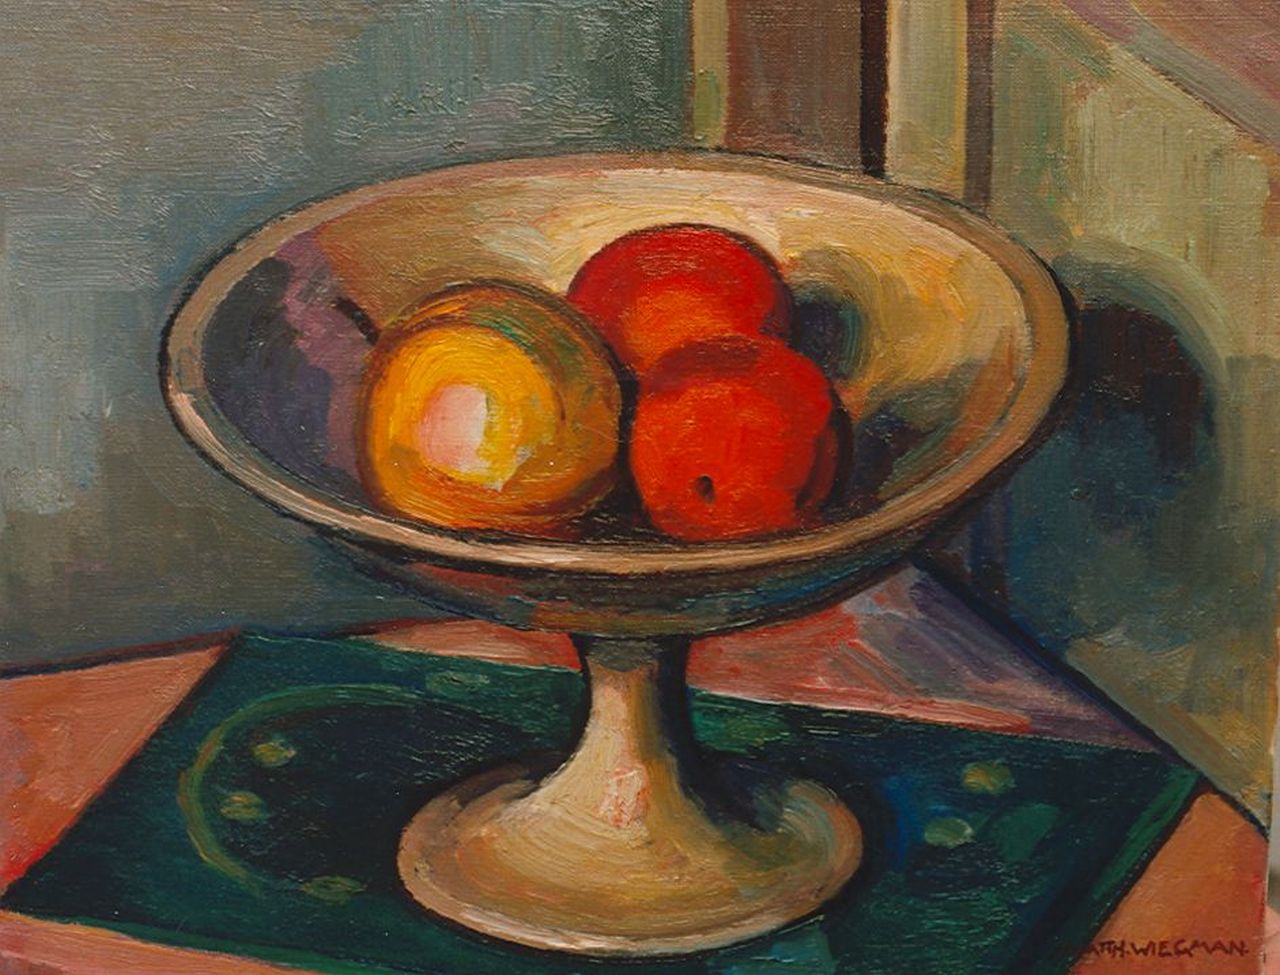 Wiegman M.J.M.  | Mattheus Johannes Marie 'Matthieu' Wiegman, A still life with apples in a bowl, oil on canvas 40.0 x 50.0 cm, signed l.r.